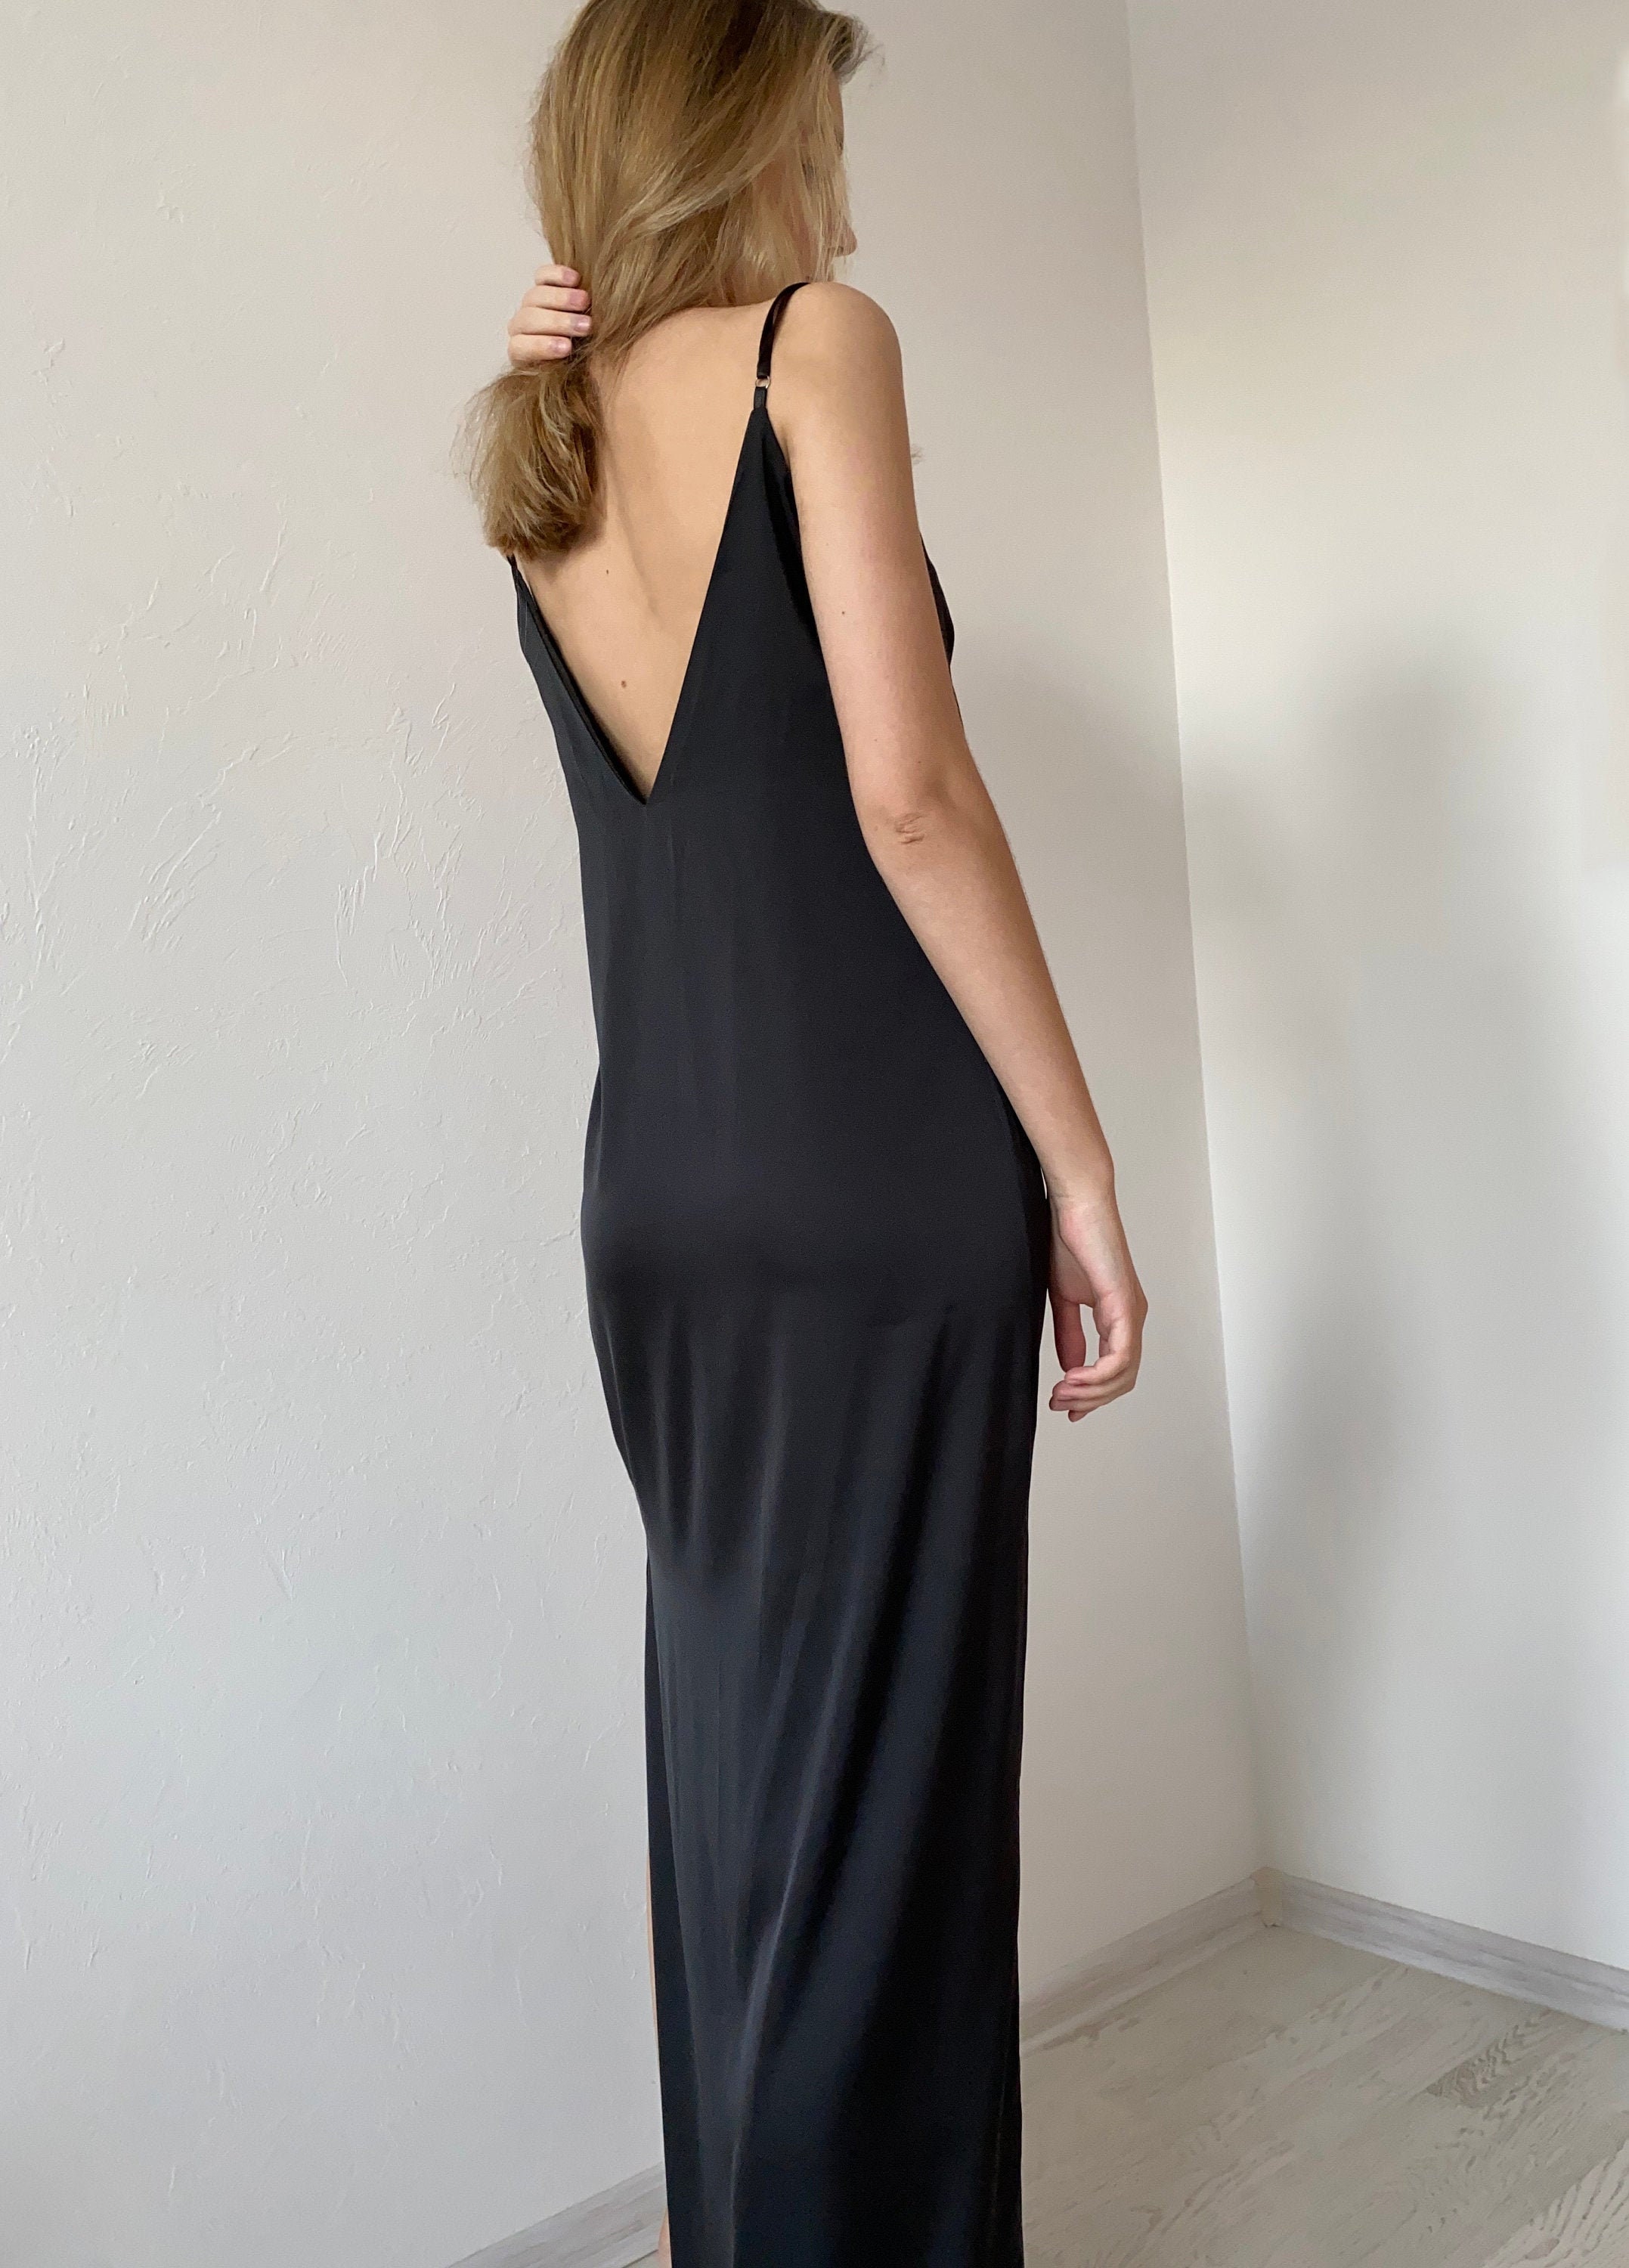 İvory Silk Satin Midi Length Slip Dress With a Long Side Slit